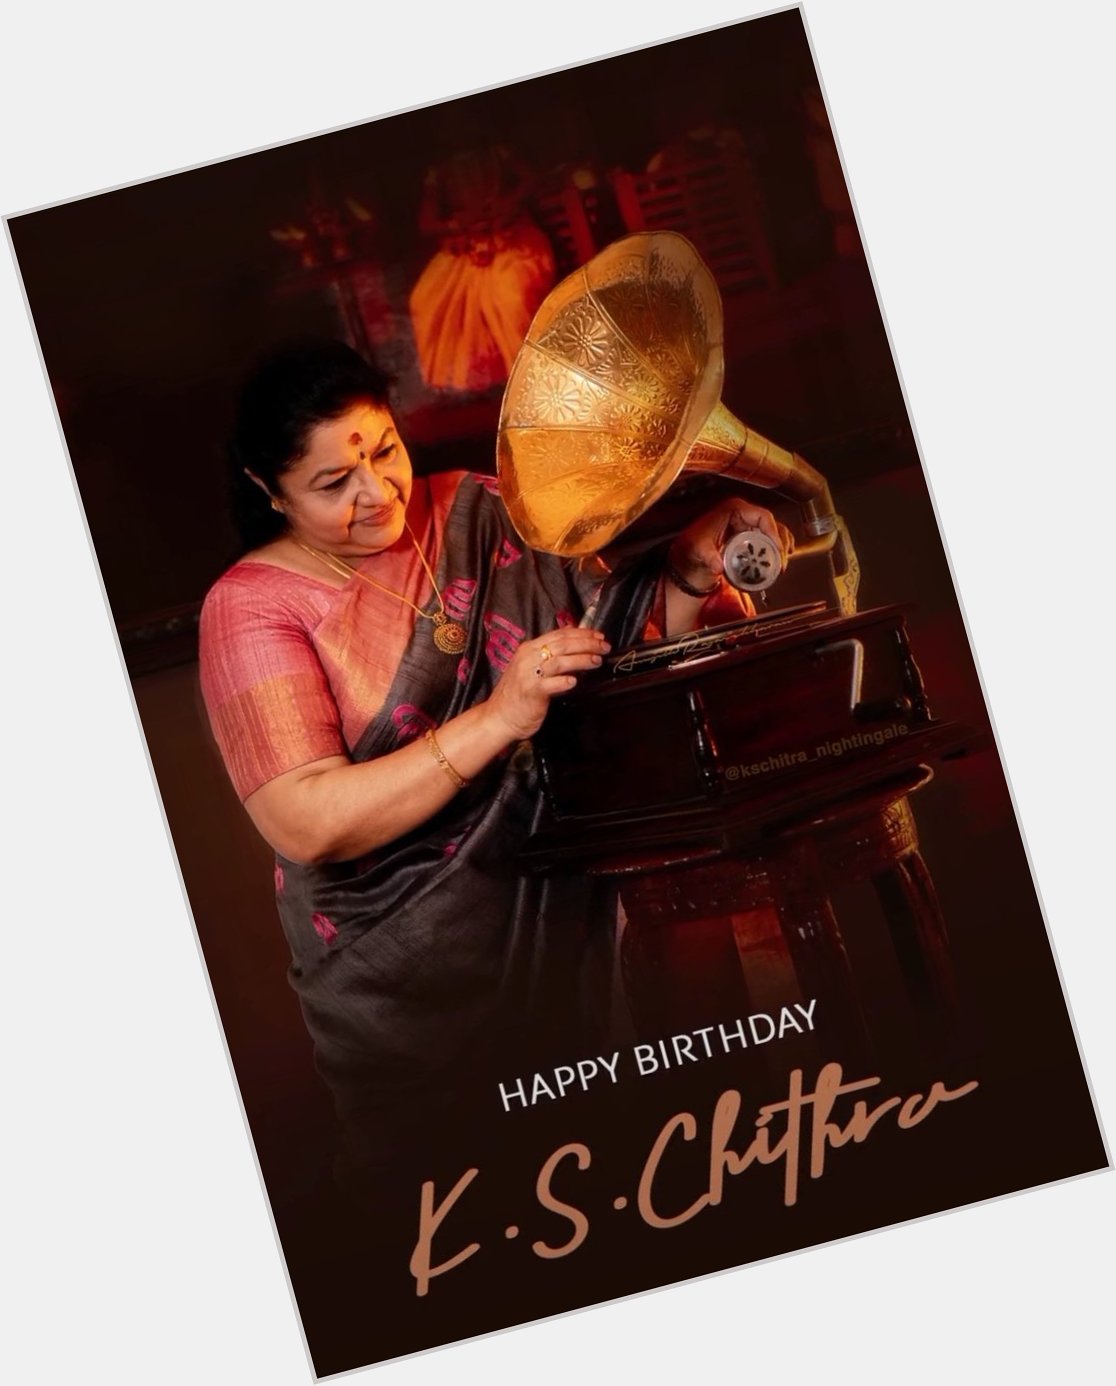 Nightingale of Indian cinema \
Padma bhushan  dr.KS.Chithra \ Happy birthday dear chechi  